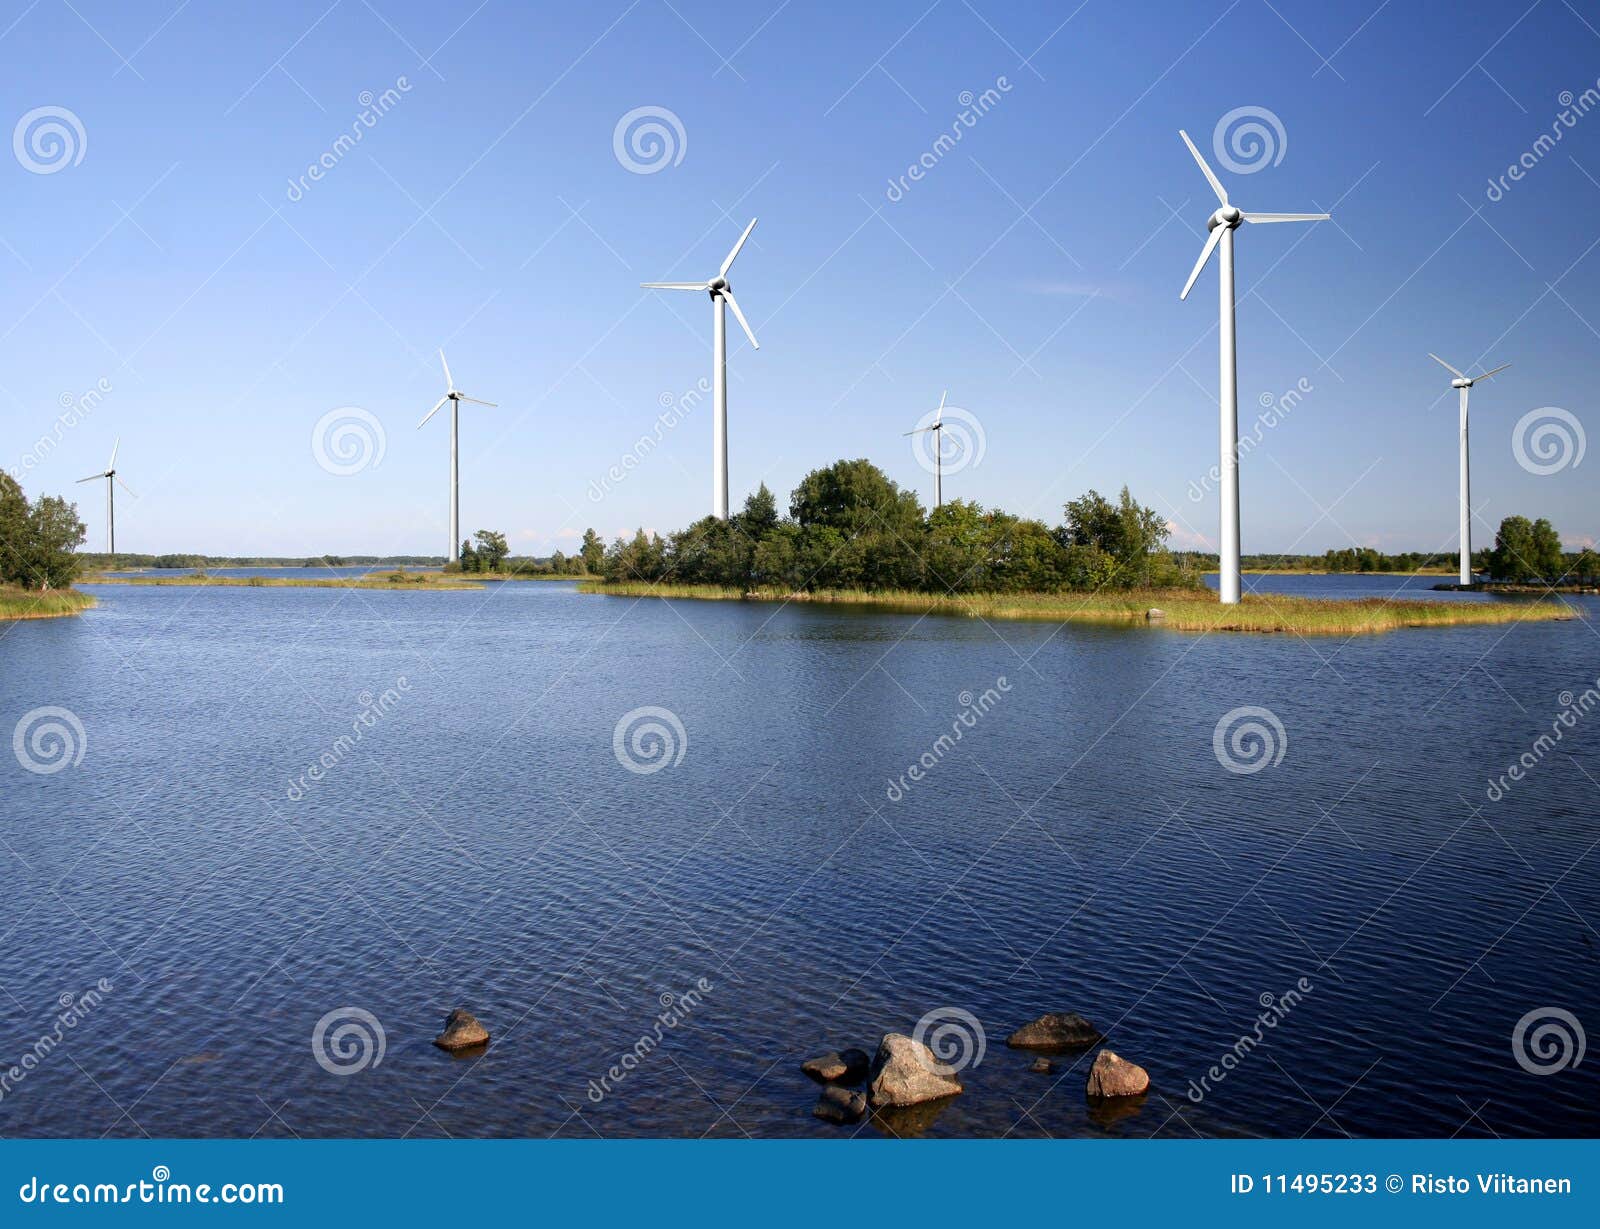 Wind power farm producing renewable electricity at seashore.